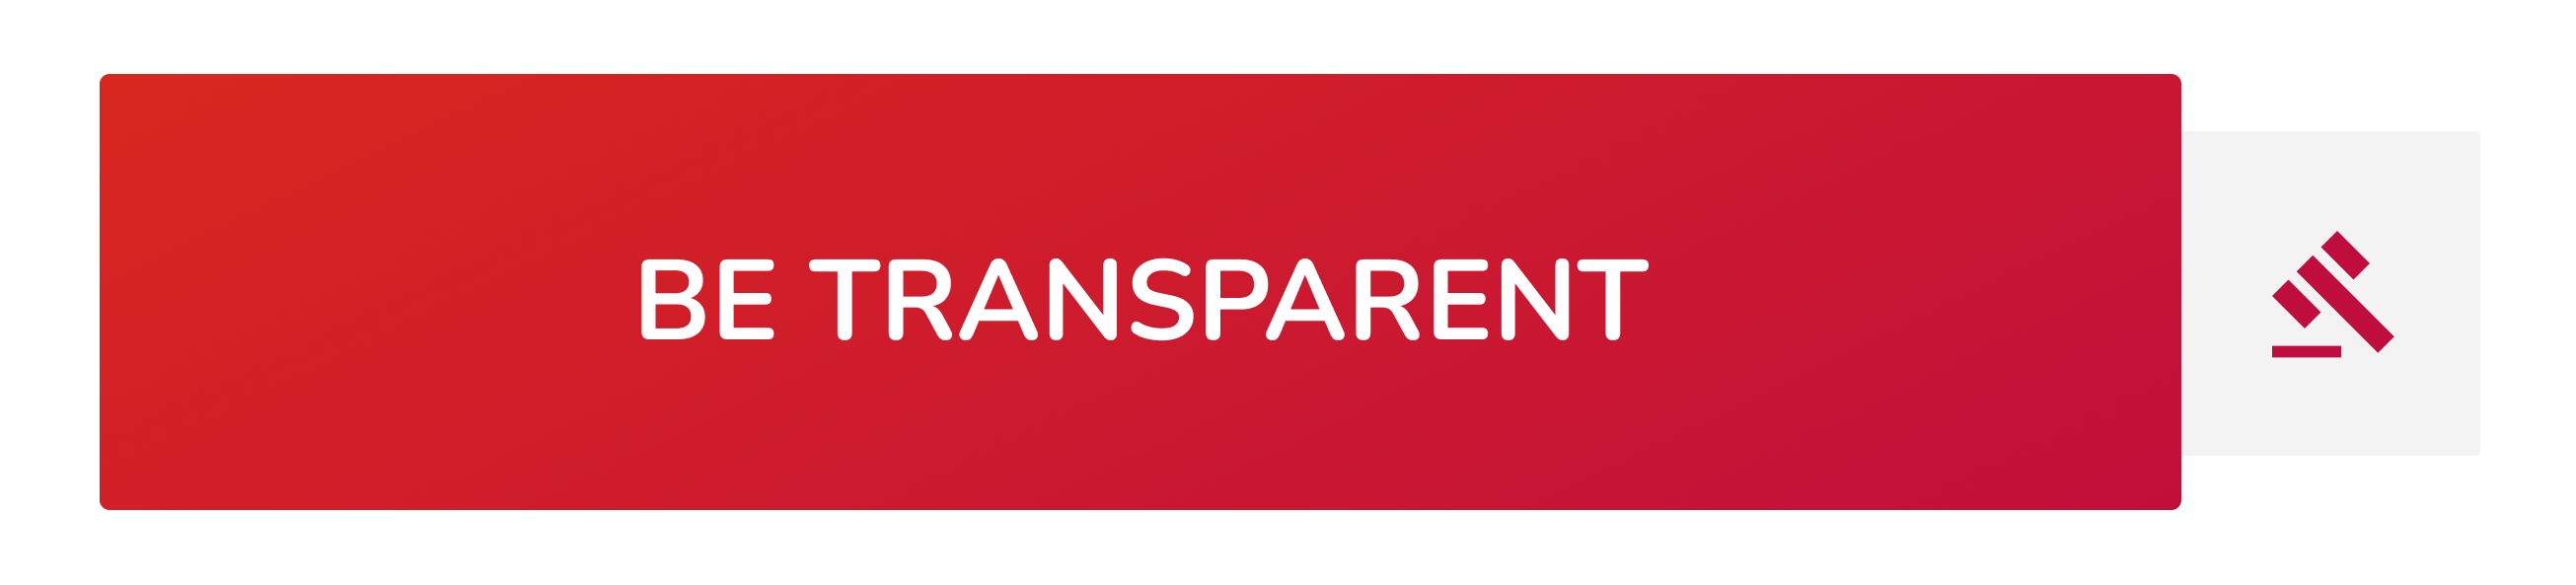 Be transparent